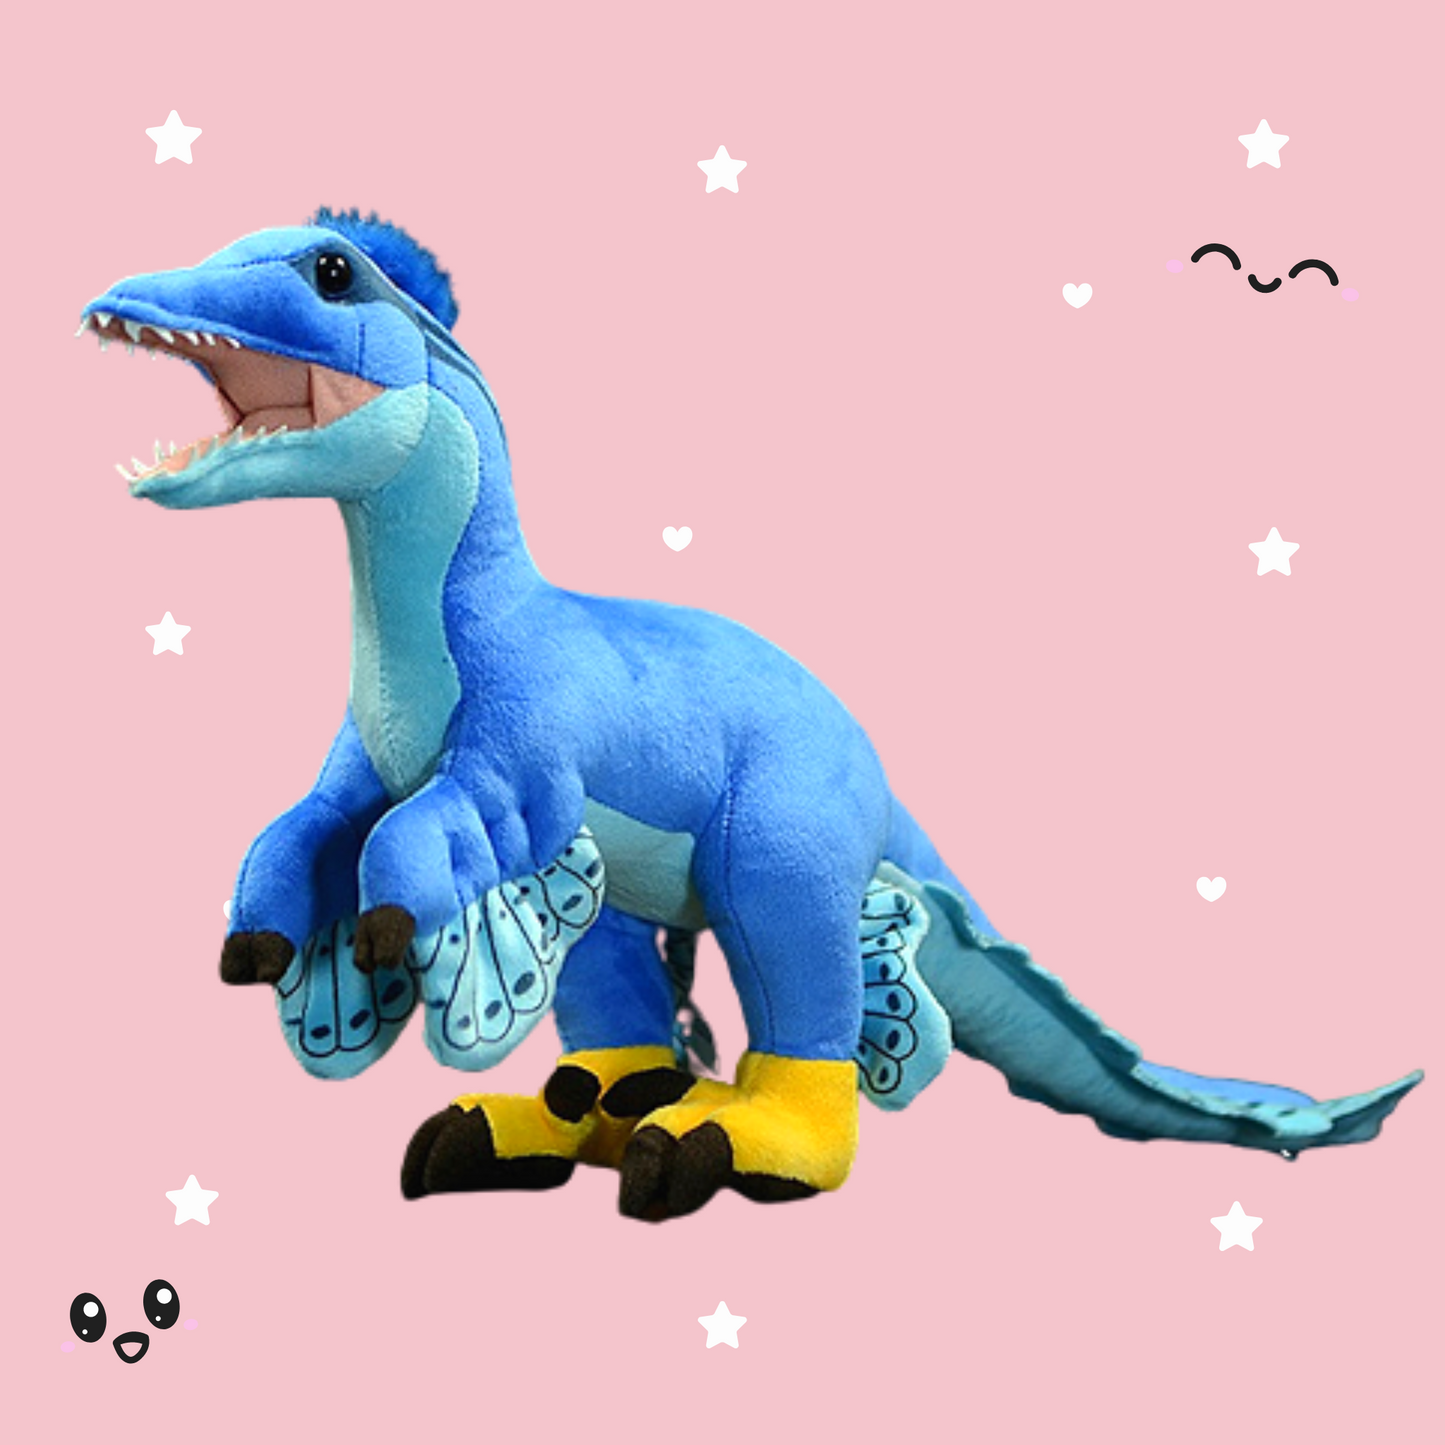 Rory the Raptor: Stuffed Dinosaur Plush Toy